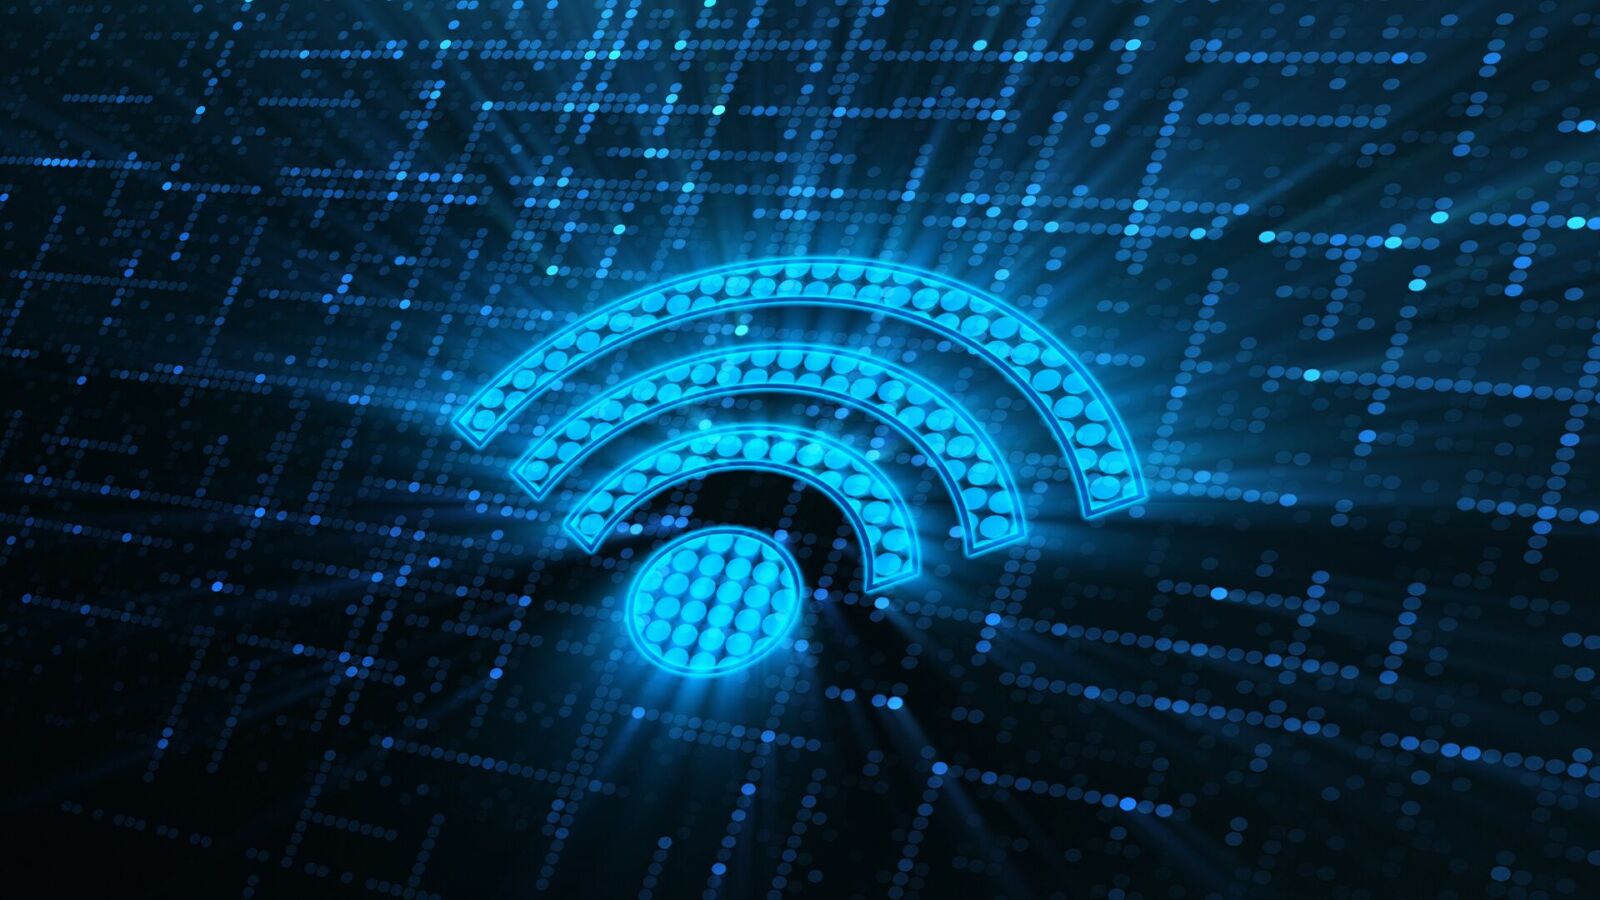 A Wi-Fi symbol over a digital, matrix-like background.